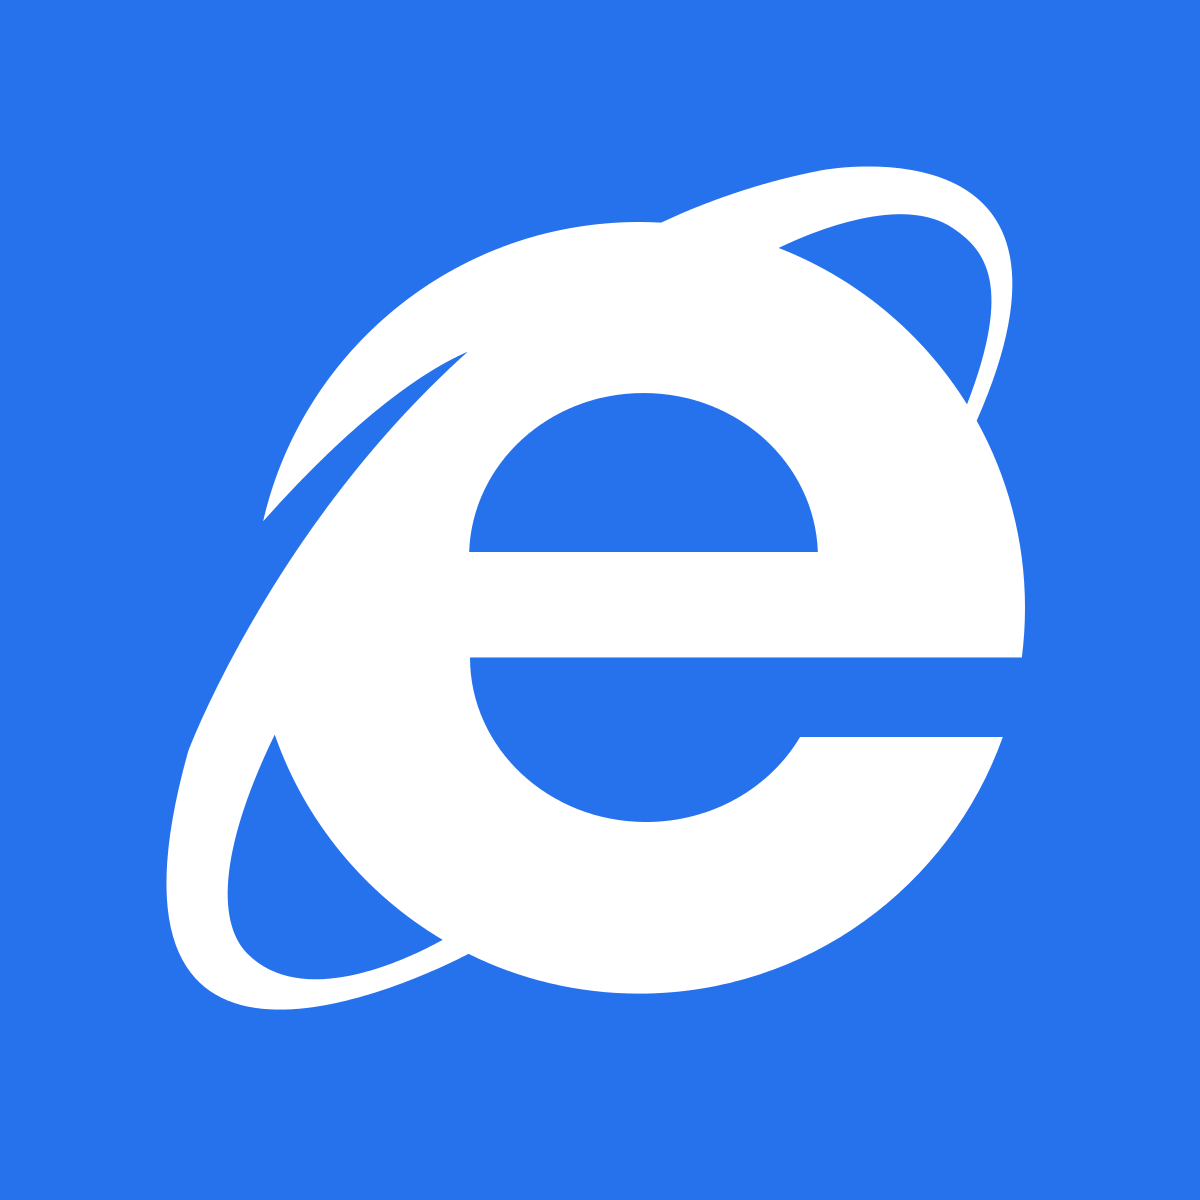 Microsoft Explorer Logo - Internet Explorer Mobile